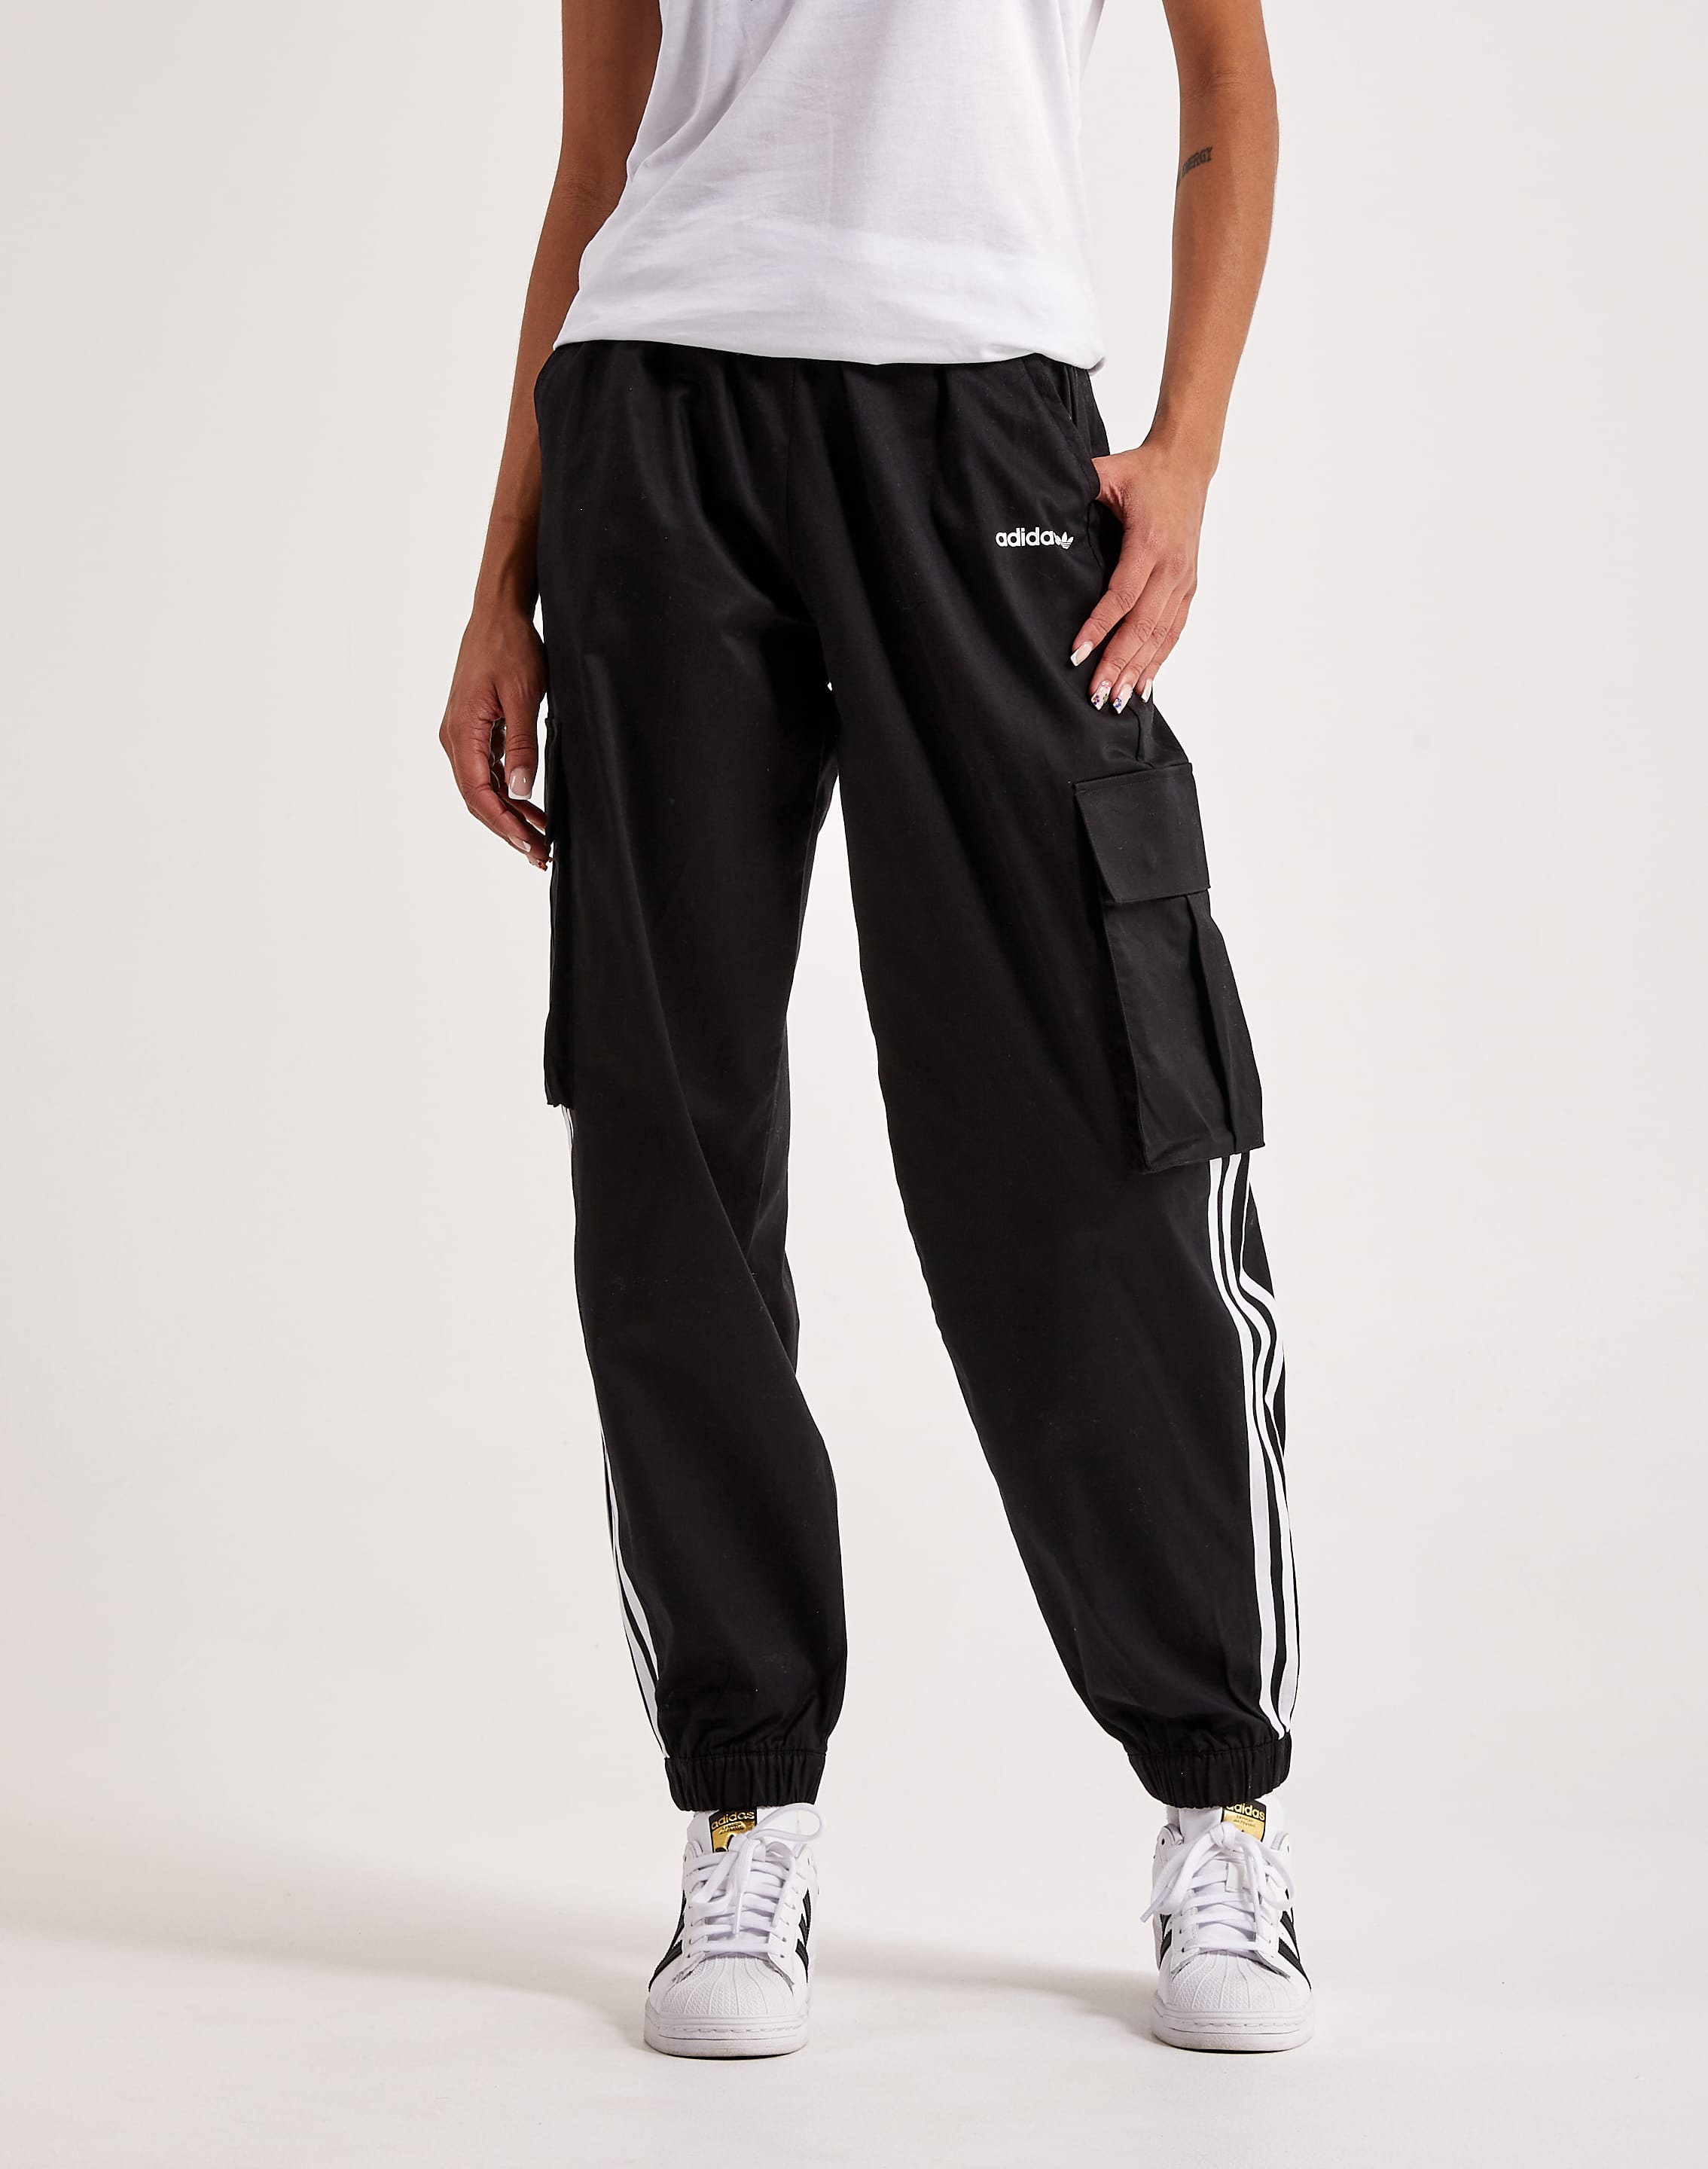 adidas Women's Sportswear Cargo Pants Silver Dawn / Black